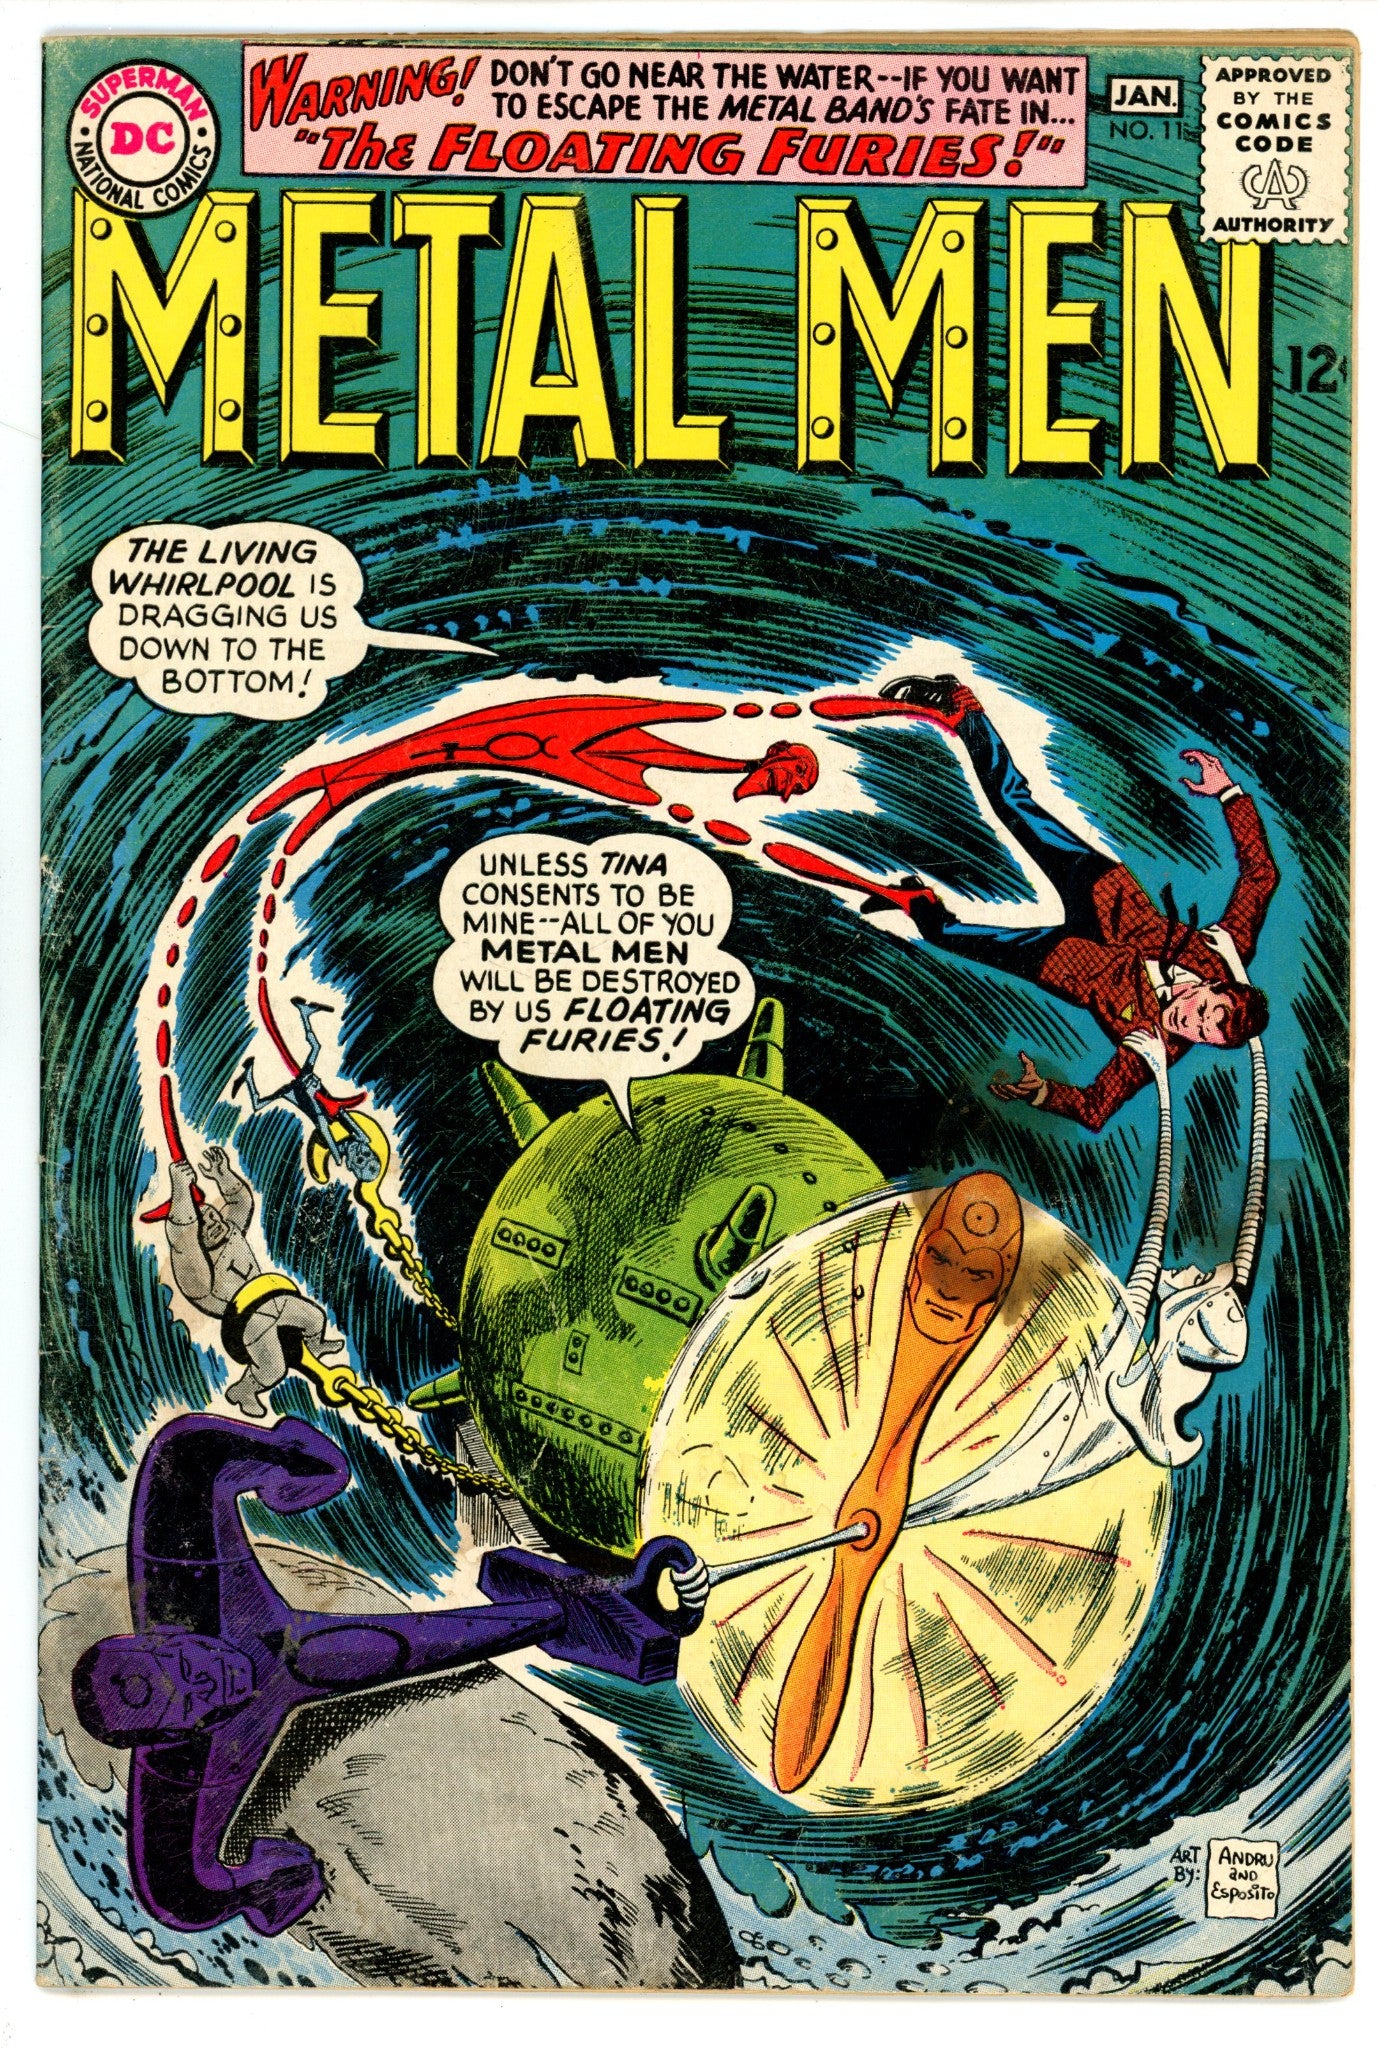 Metal Men Vol 1 11 GD/VG (3.0) (1964) 